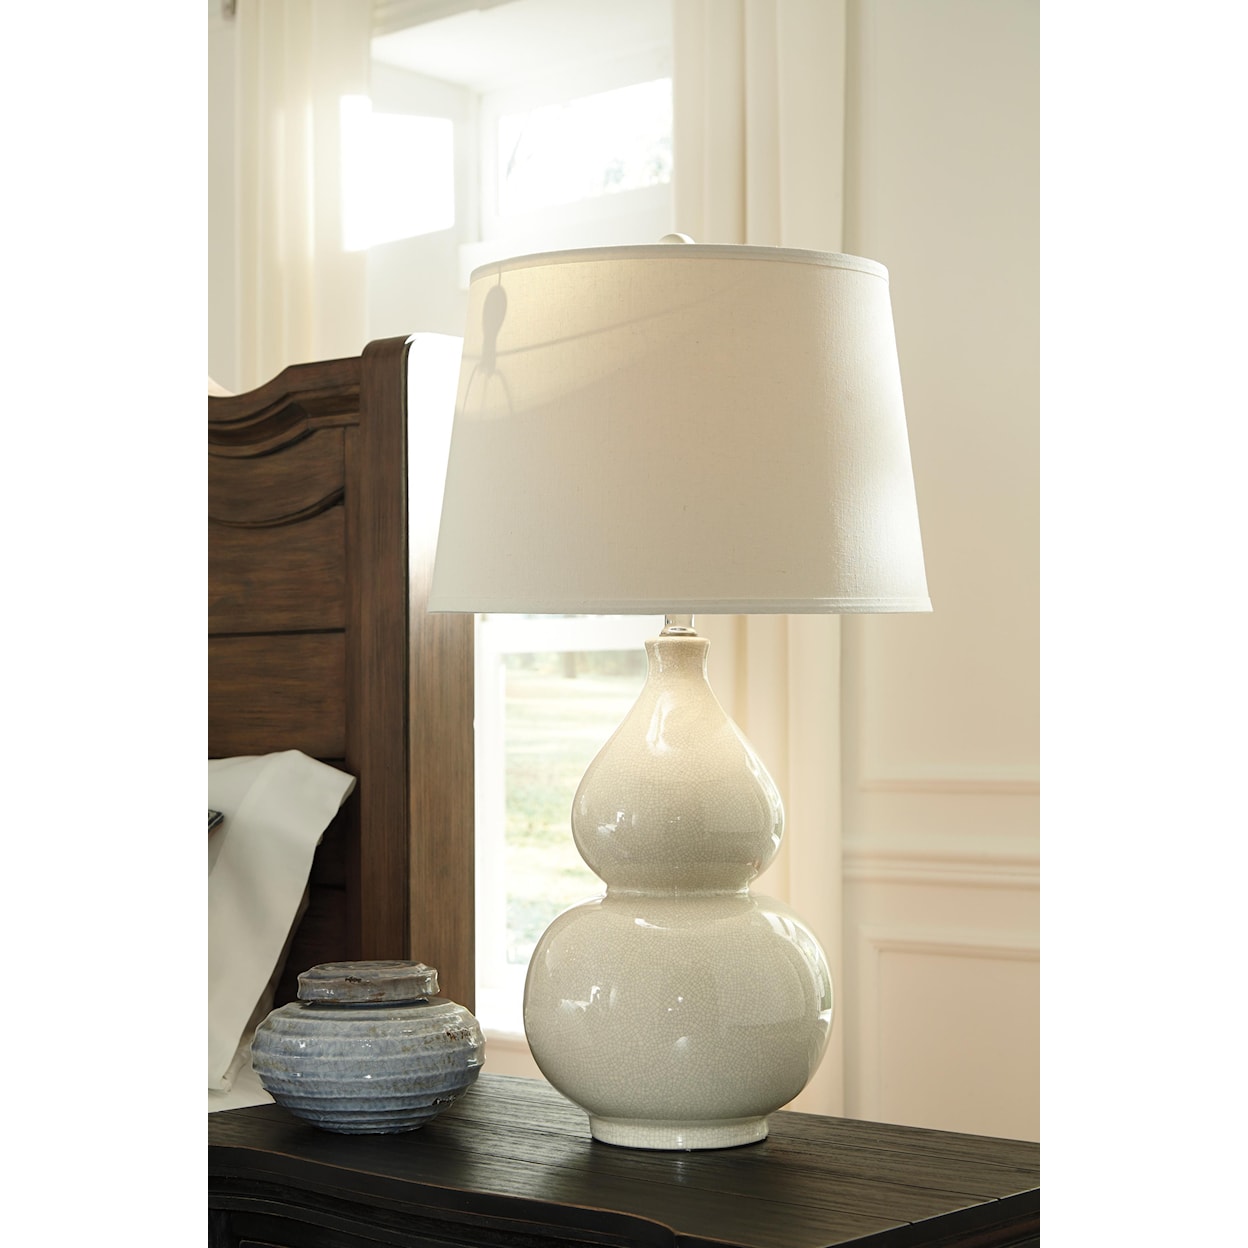 Ashley Furniture Signature Design Lamps - Contemporary Ceramic Table Lamp 